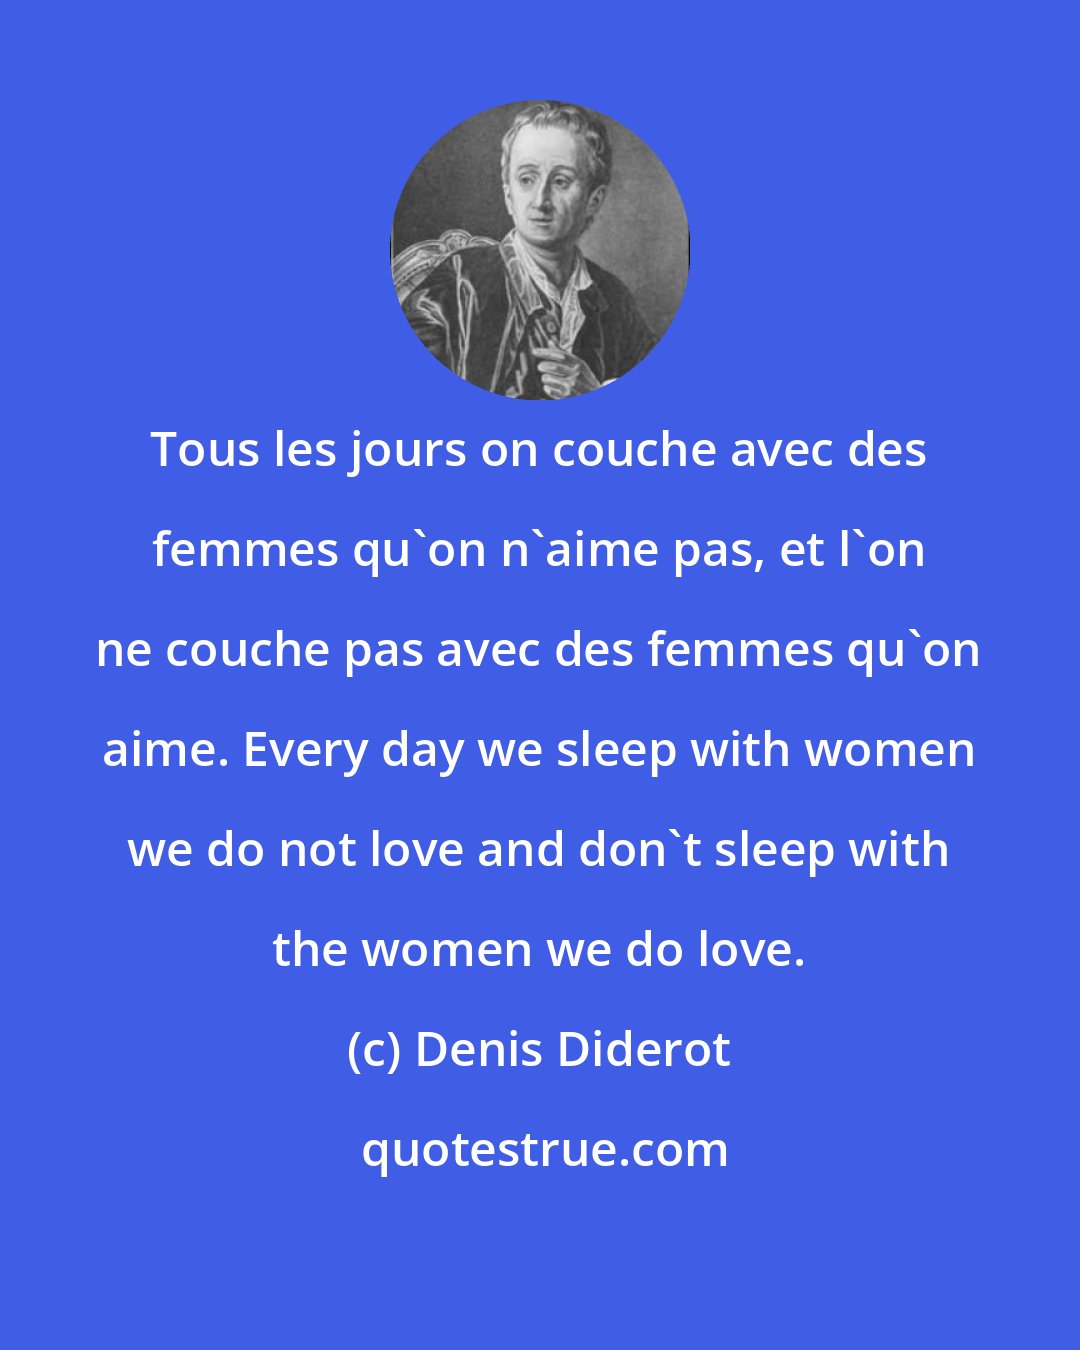 Denis Diderot: Tous les jours on couche avec des femmes qu'on n'aime pas, et l'on ne couche pas avec des femmes qu'on aime. Every day we sleep with women we do not love and don't sleep with the women we do love.